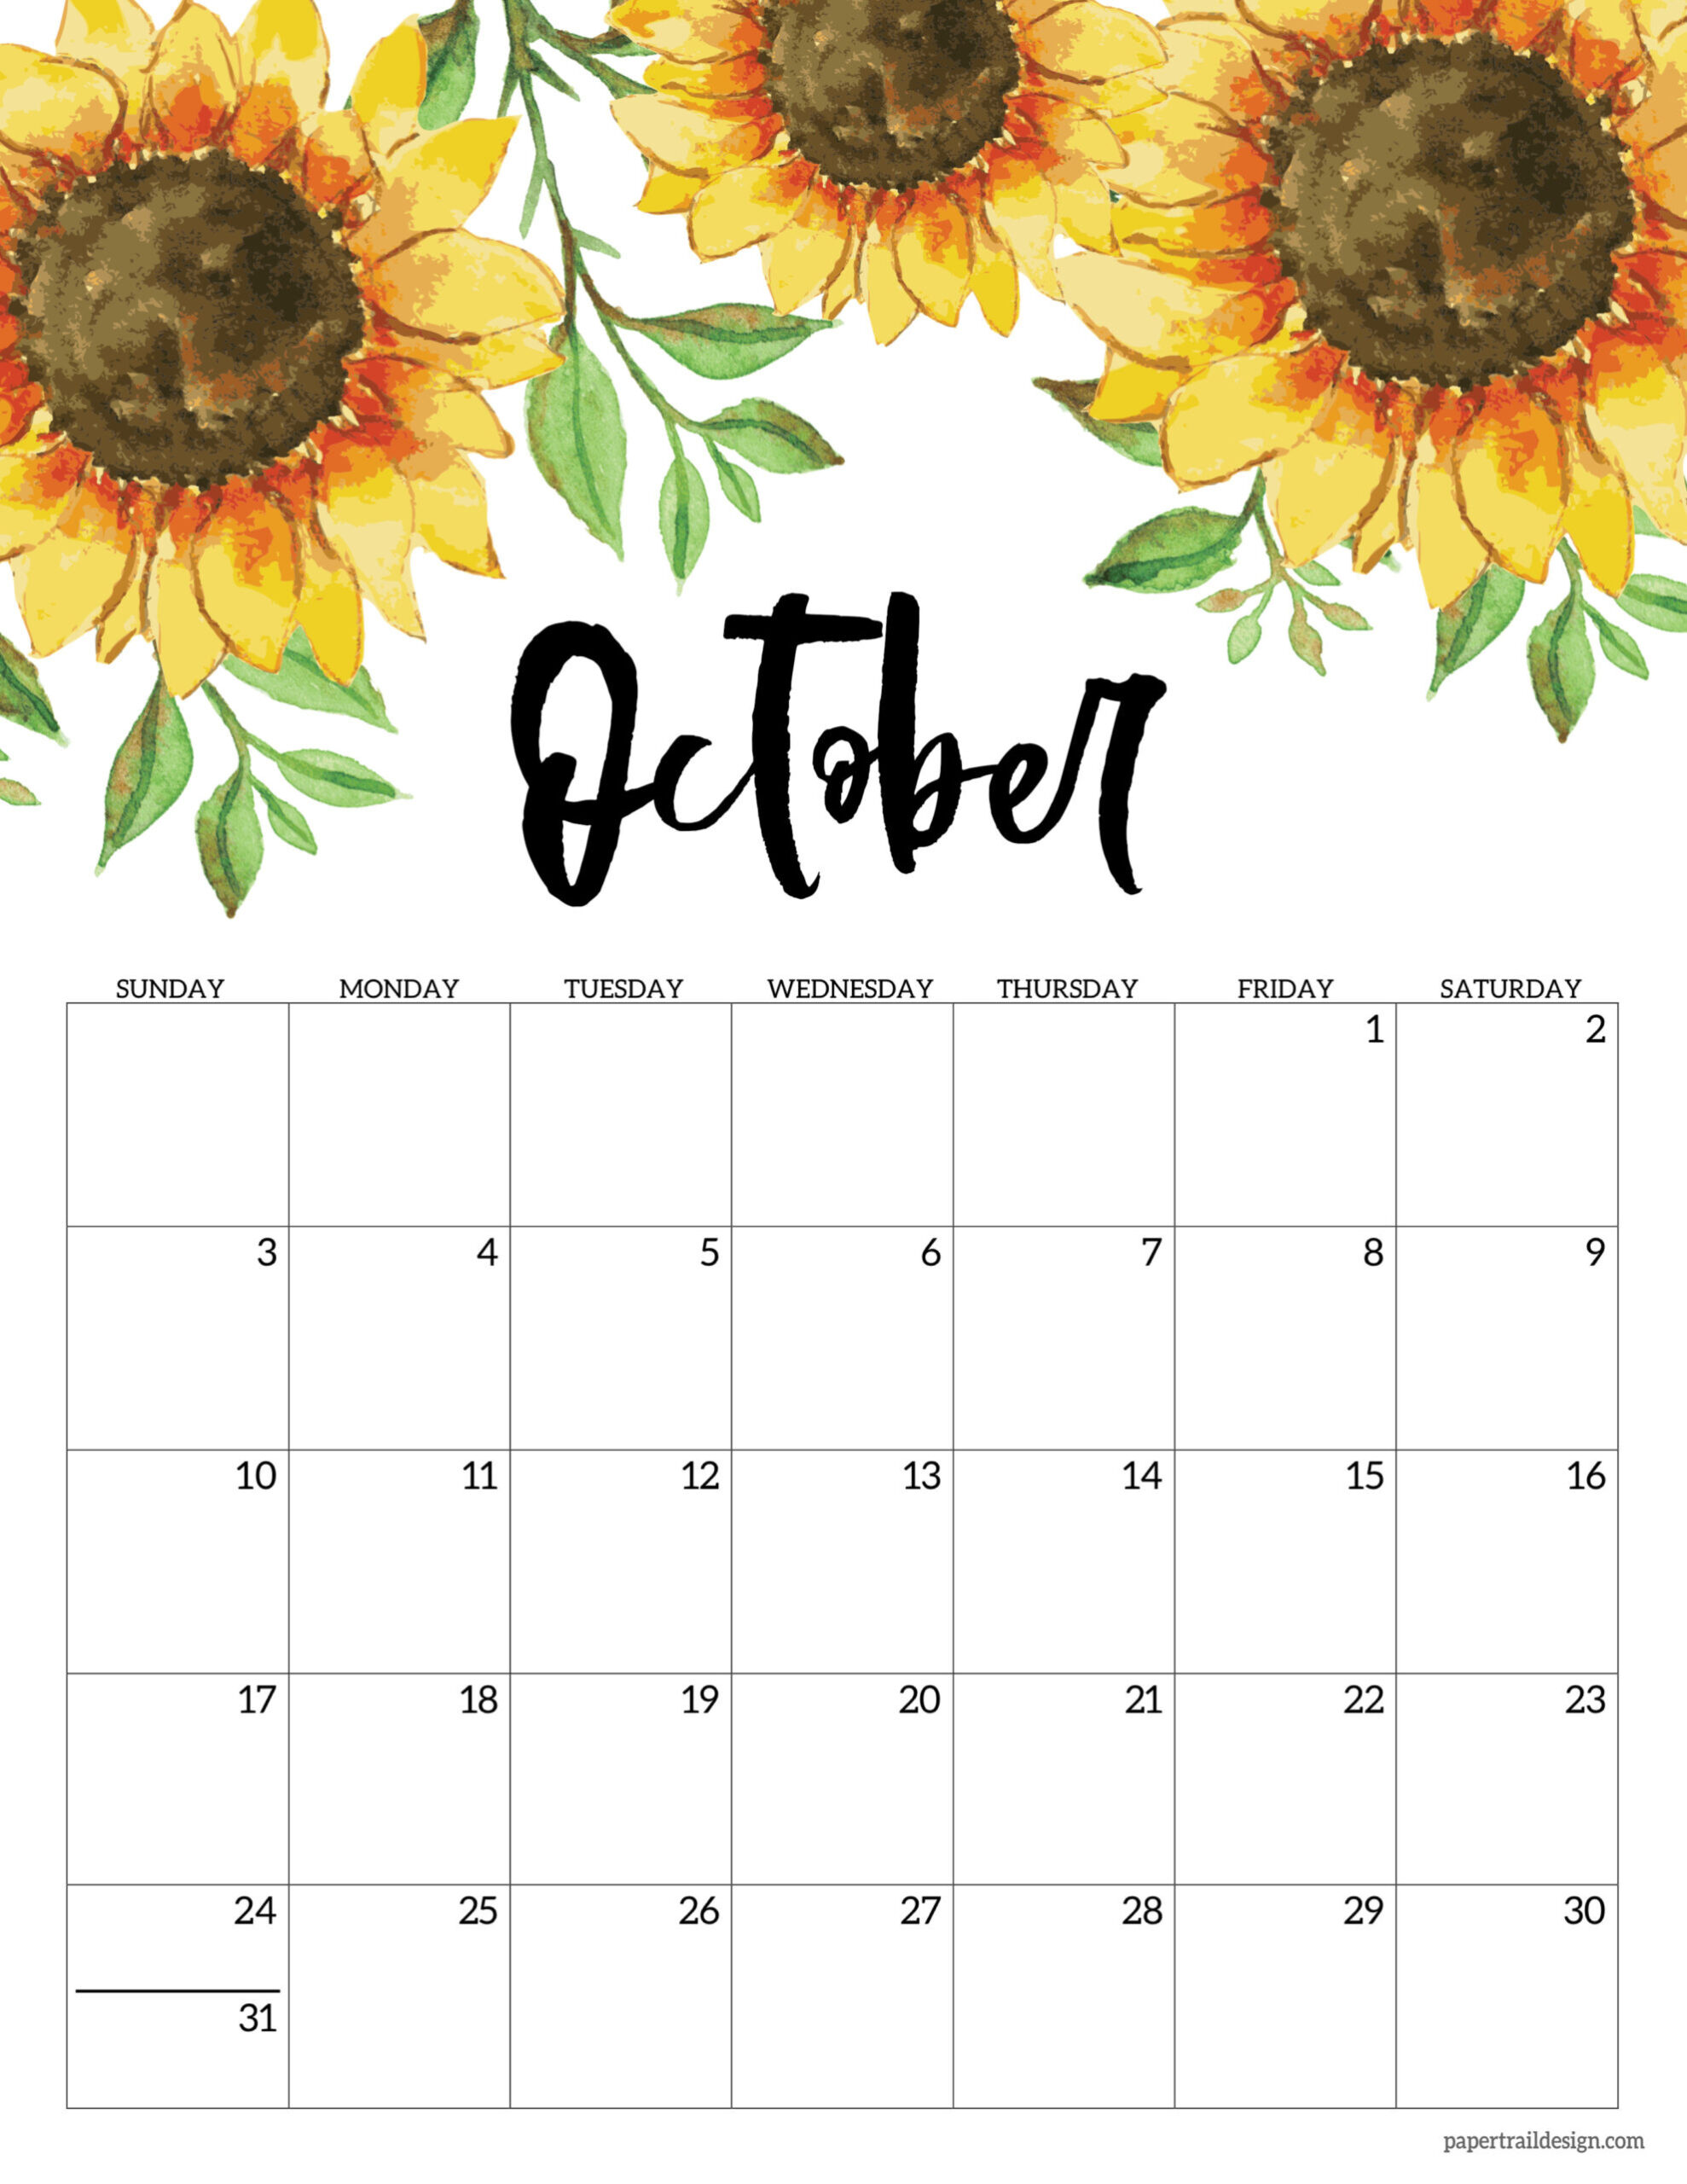 Free Printable Calendar 2021 - Floral - Paper Trail Design-Free Printable Calendar 2021